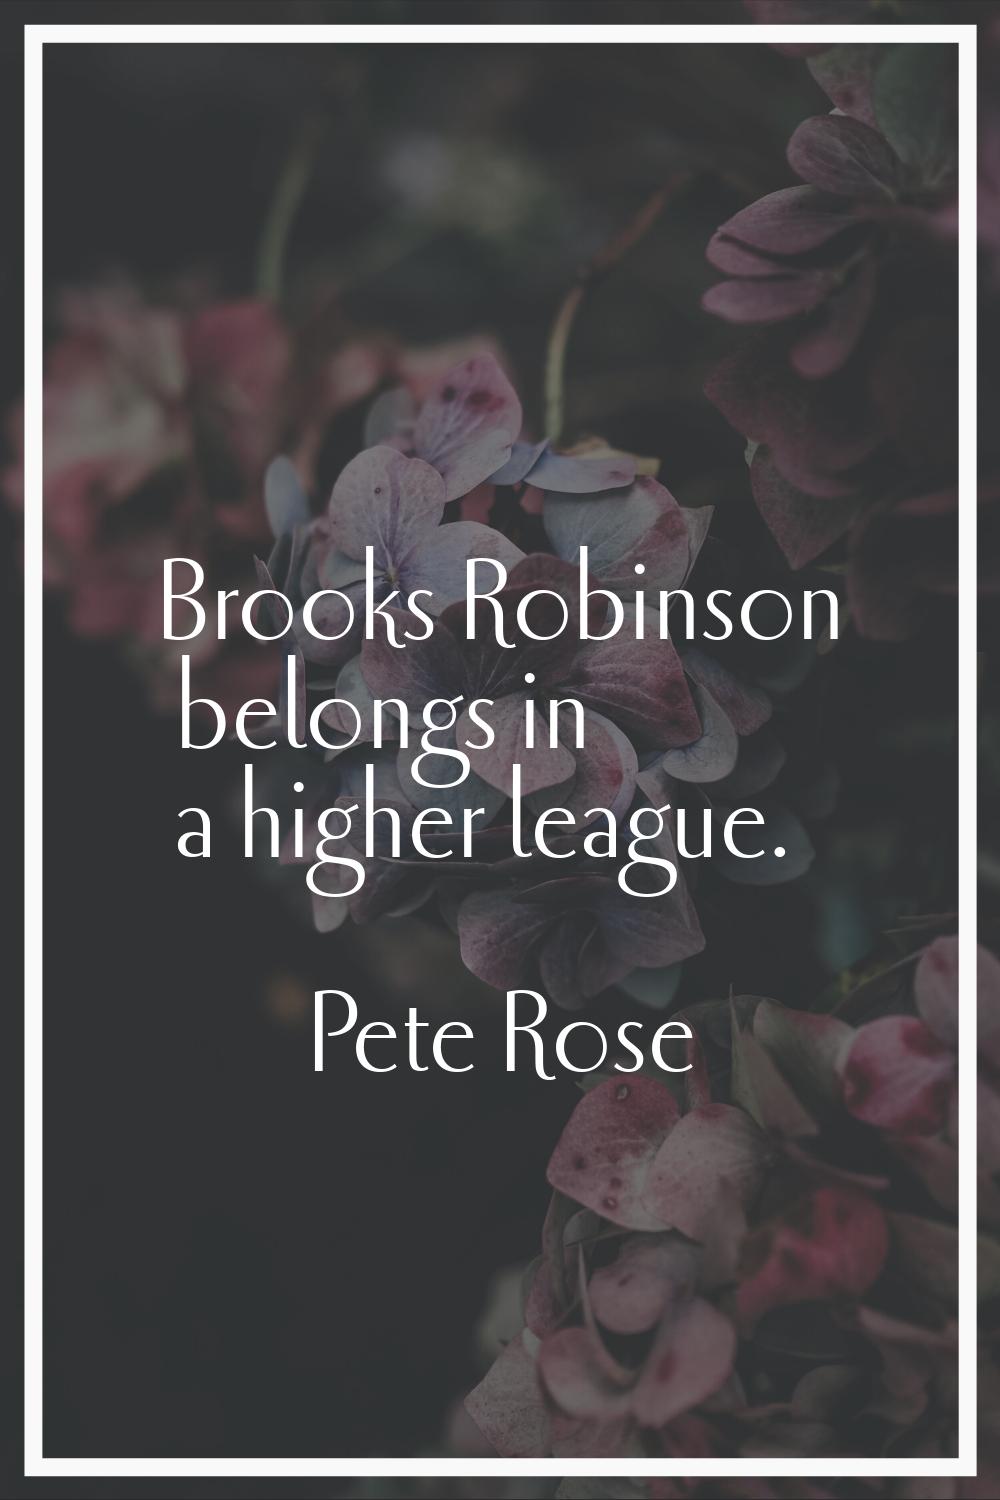 Brooks Robinson belongs in a higher league.